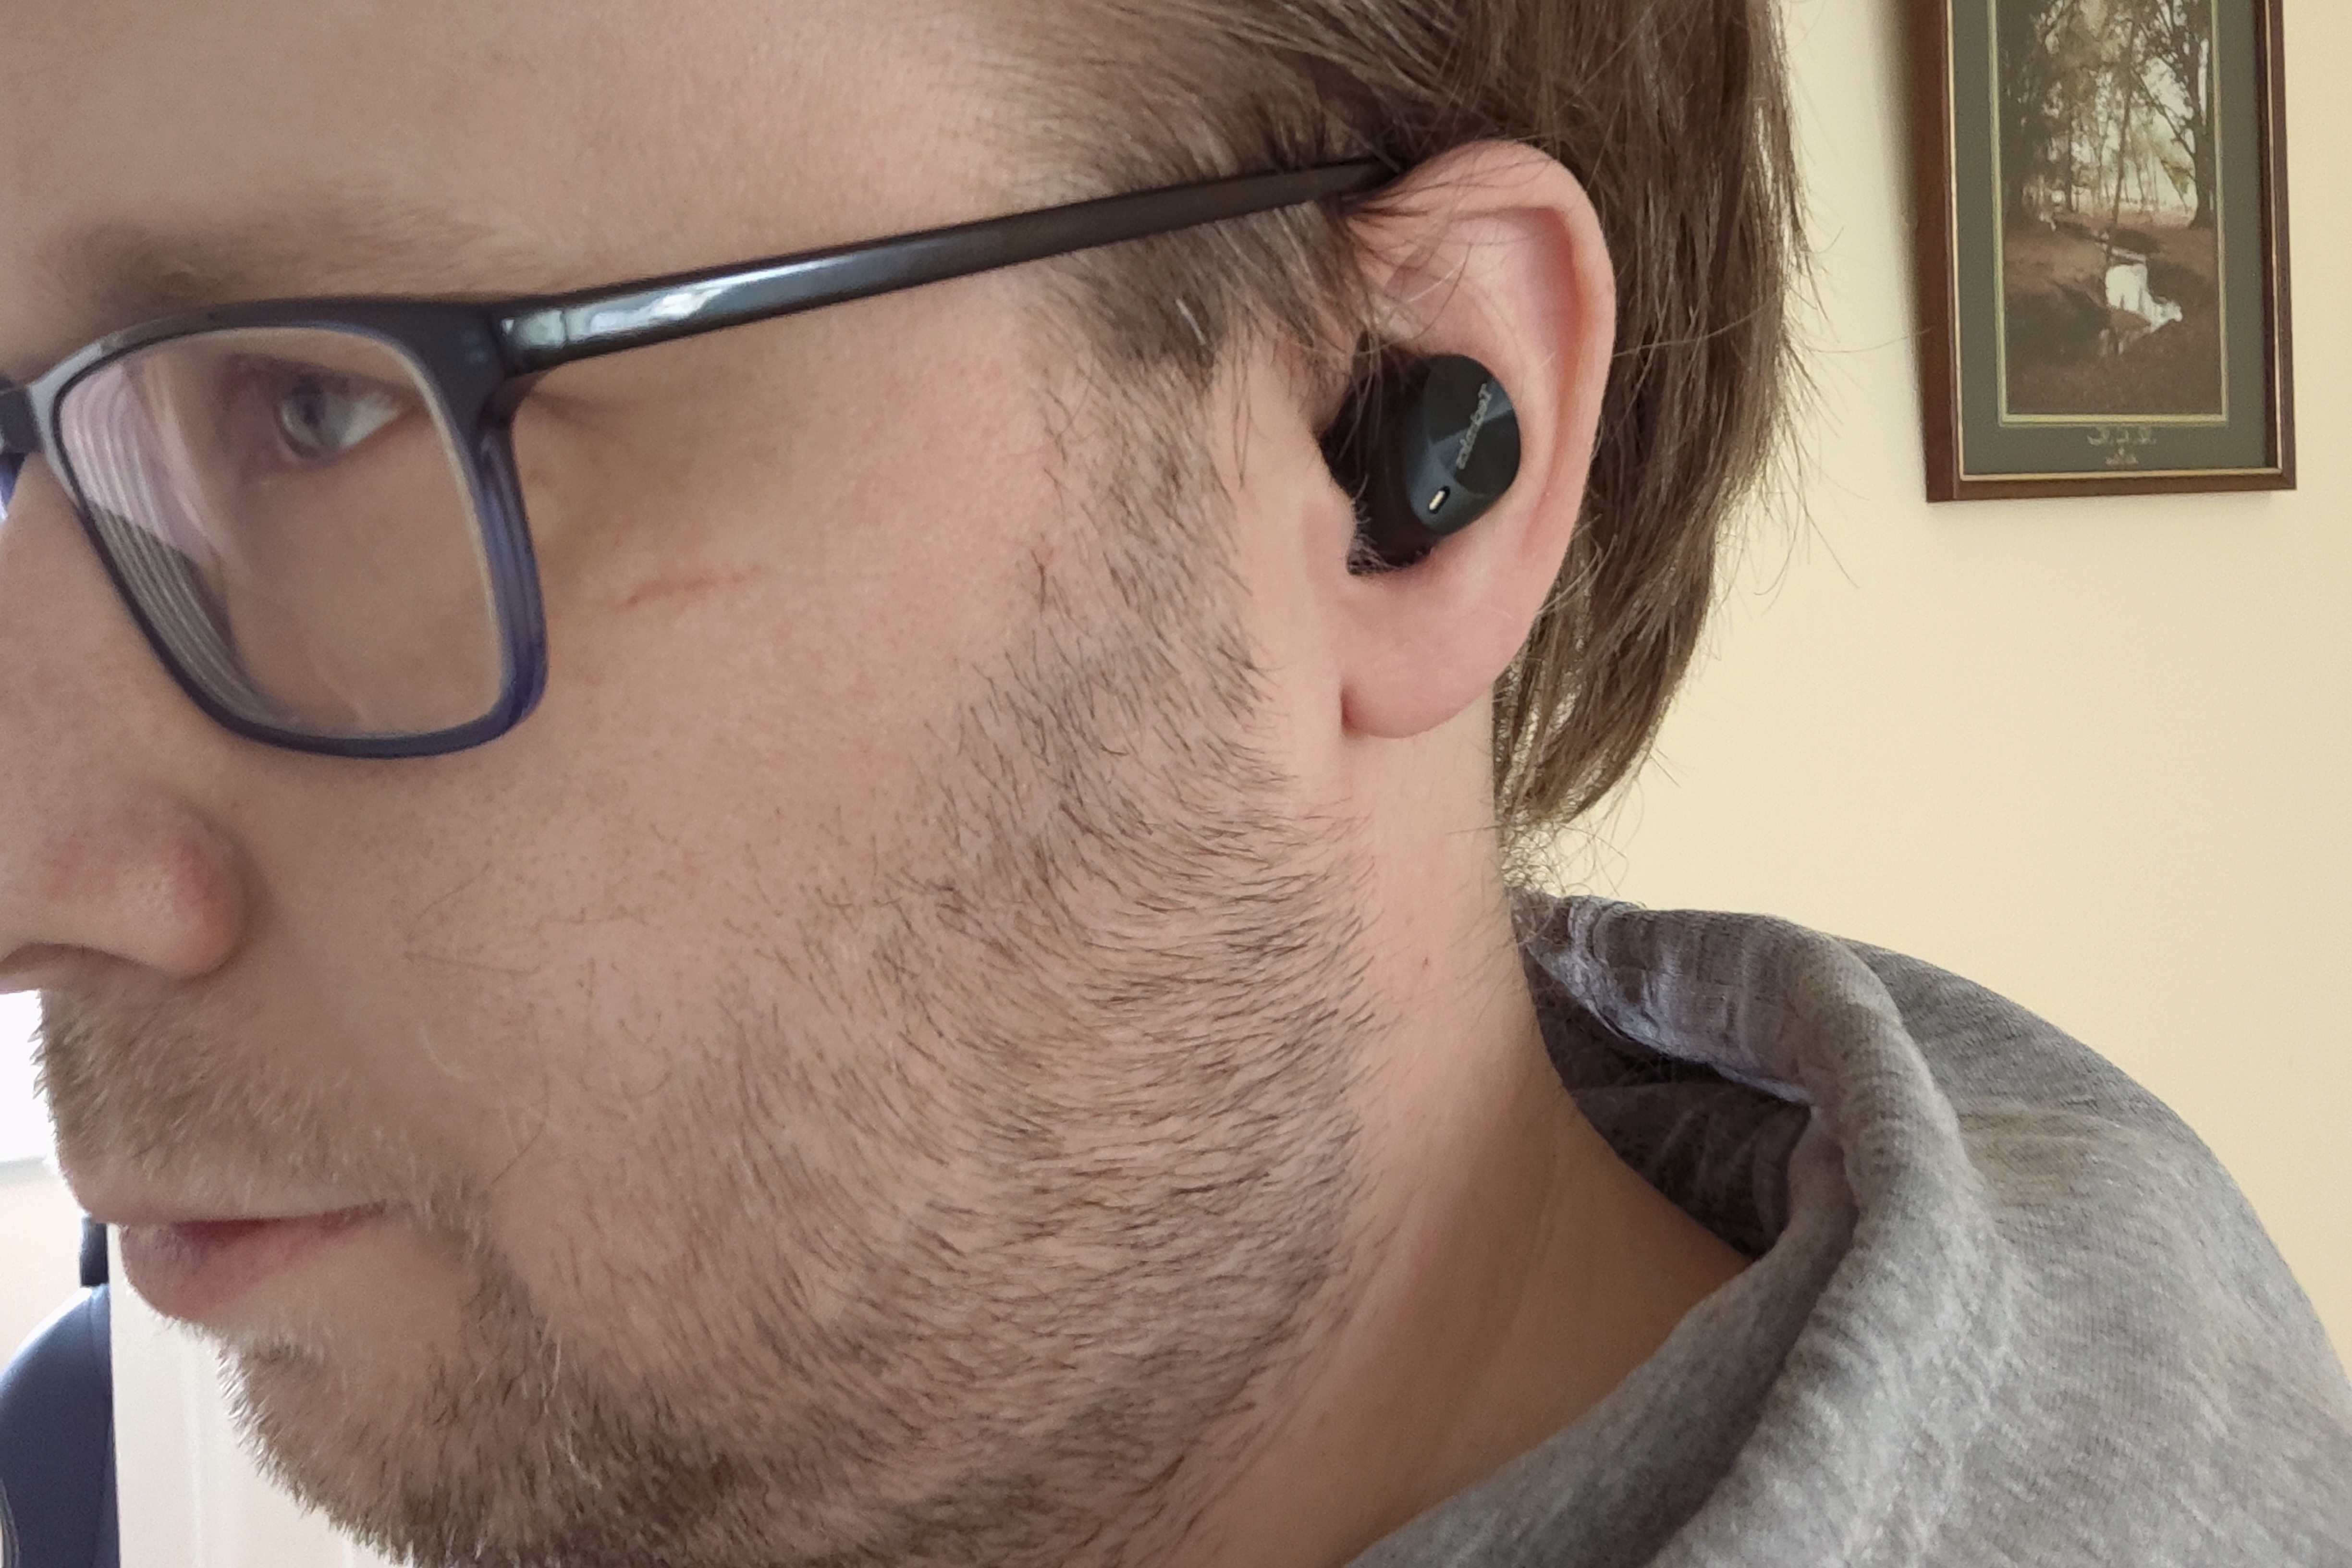 Panasonic Technics EAH-AZ80 earbuds being worn by a man